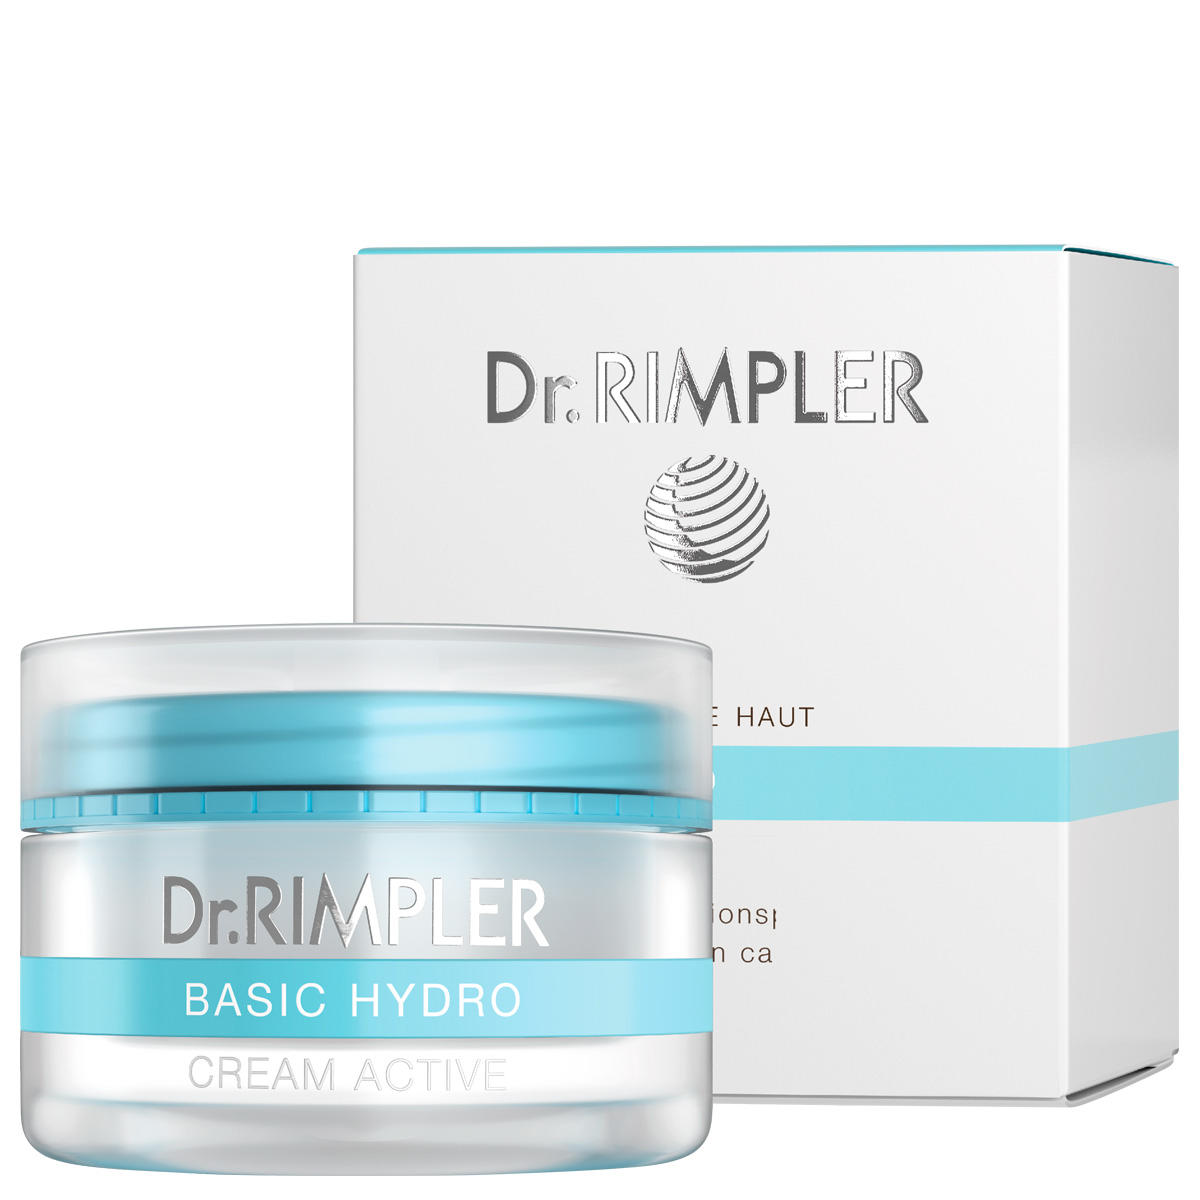 Dr. RIMPLER BASIC HYDRO Cream Active 50 ml - 2